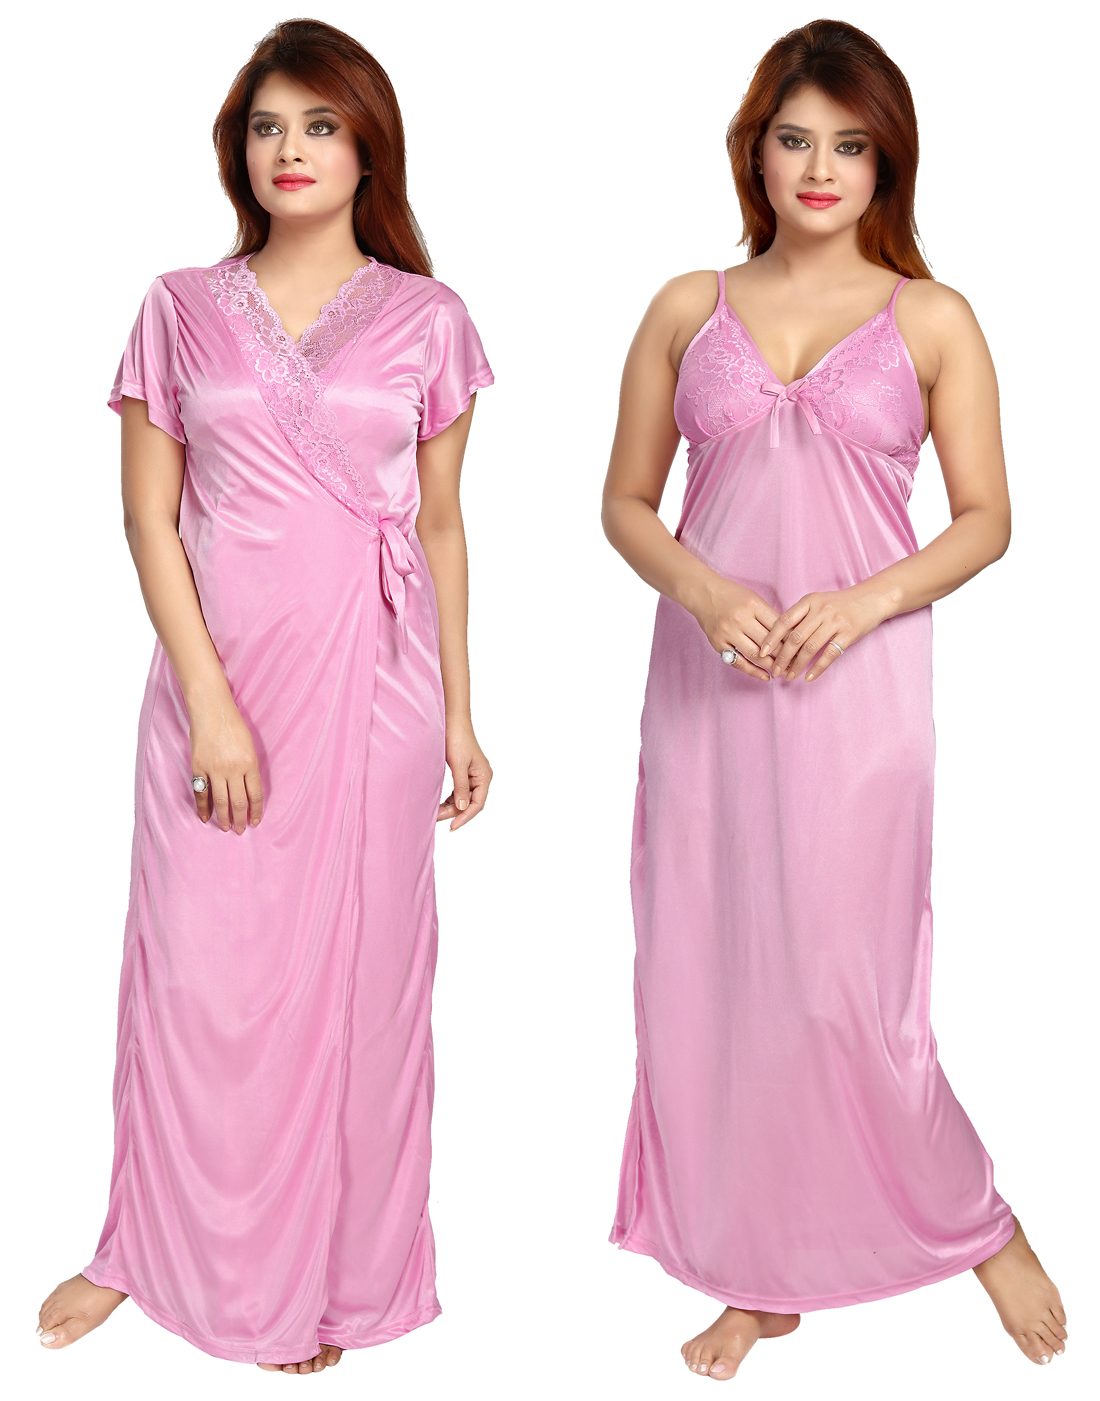 Buy Be You Pink Solid Women Nightwear Set 3 Piece Nighty Set Online ₹988 From Shopclues 